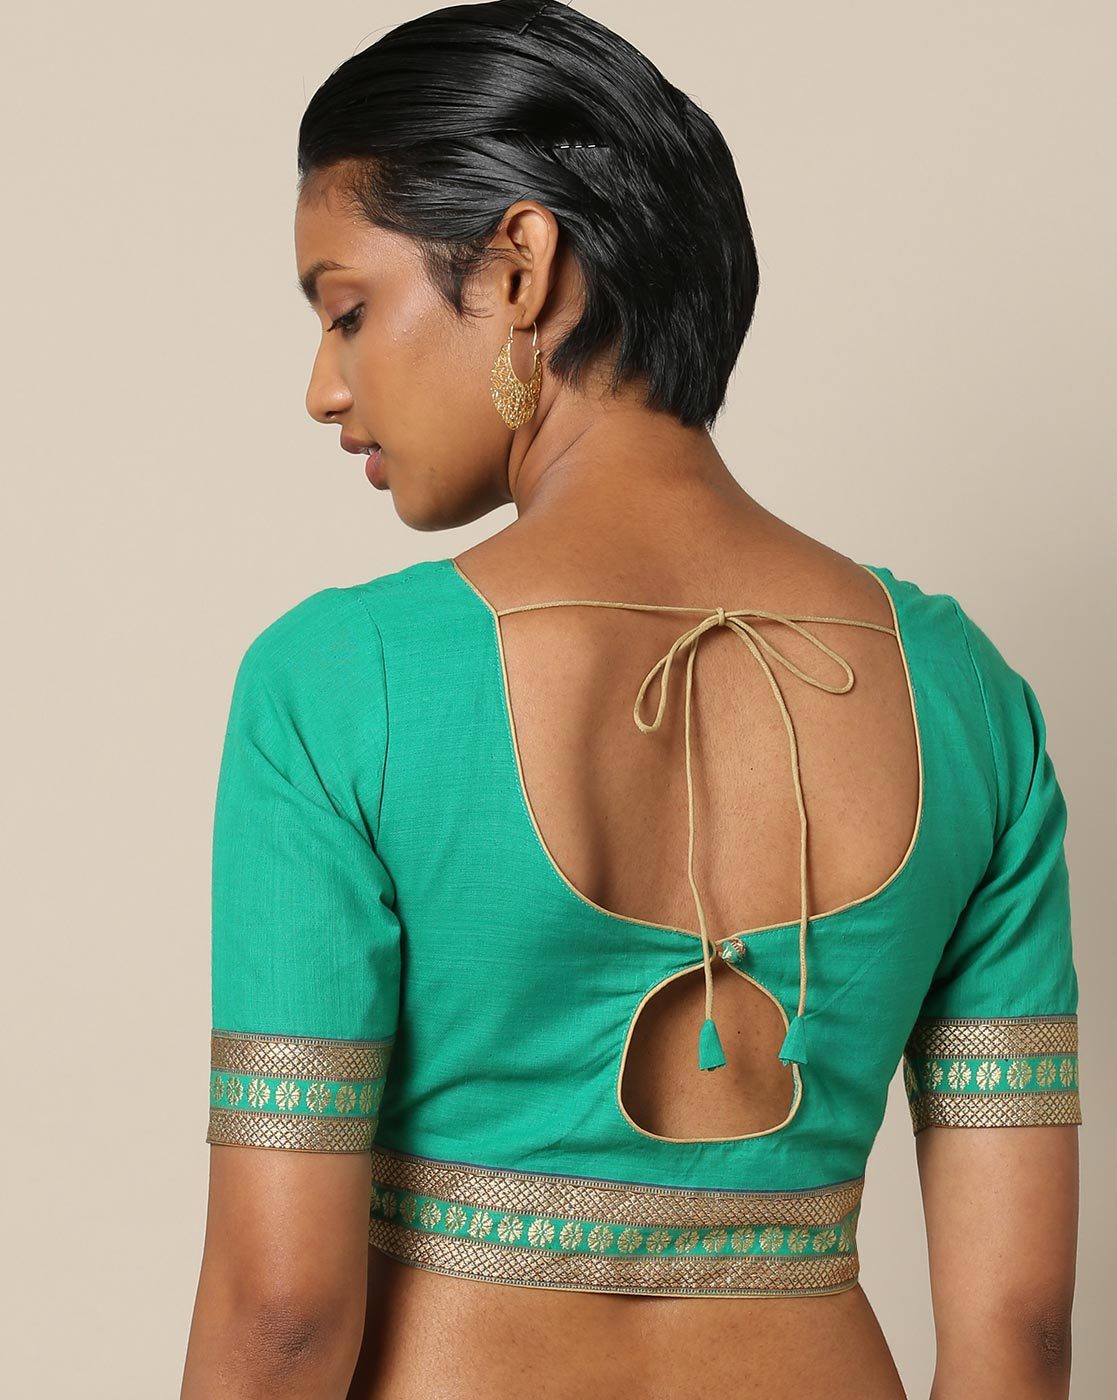 simple blouse back neck designs